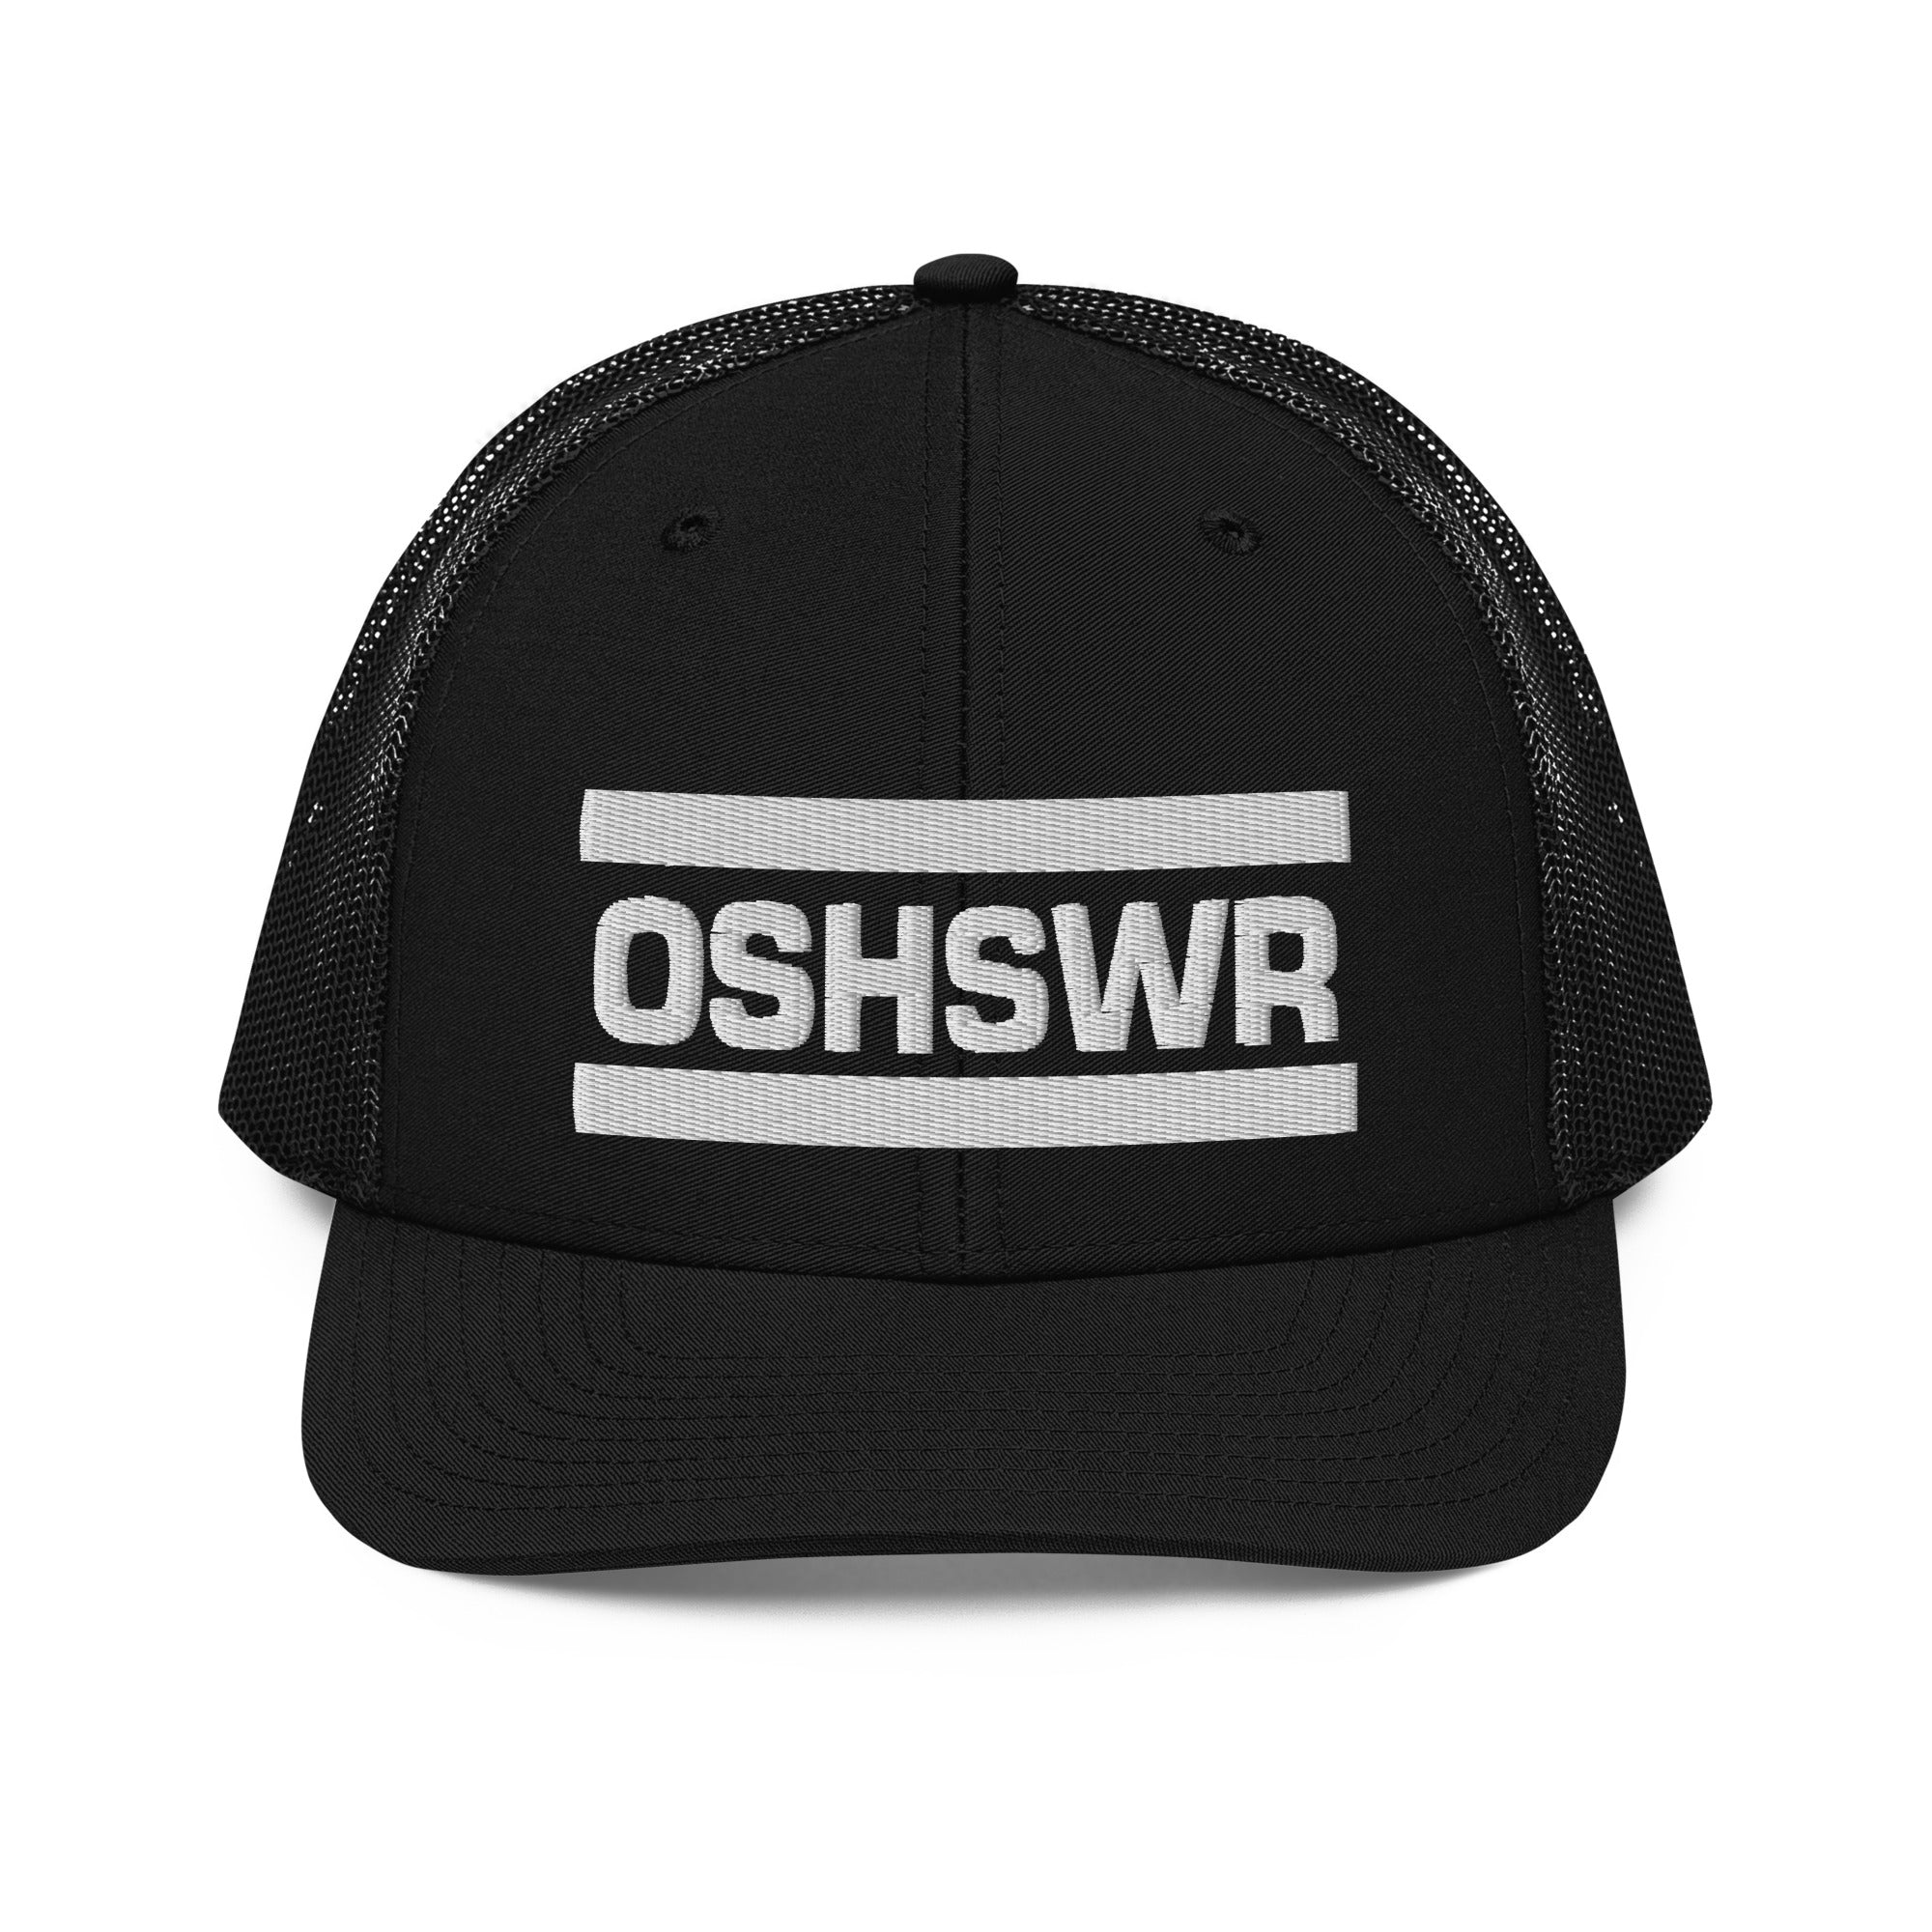 OSHSWR Trucker Cap